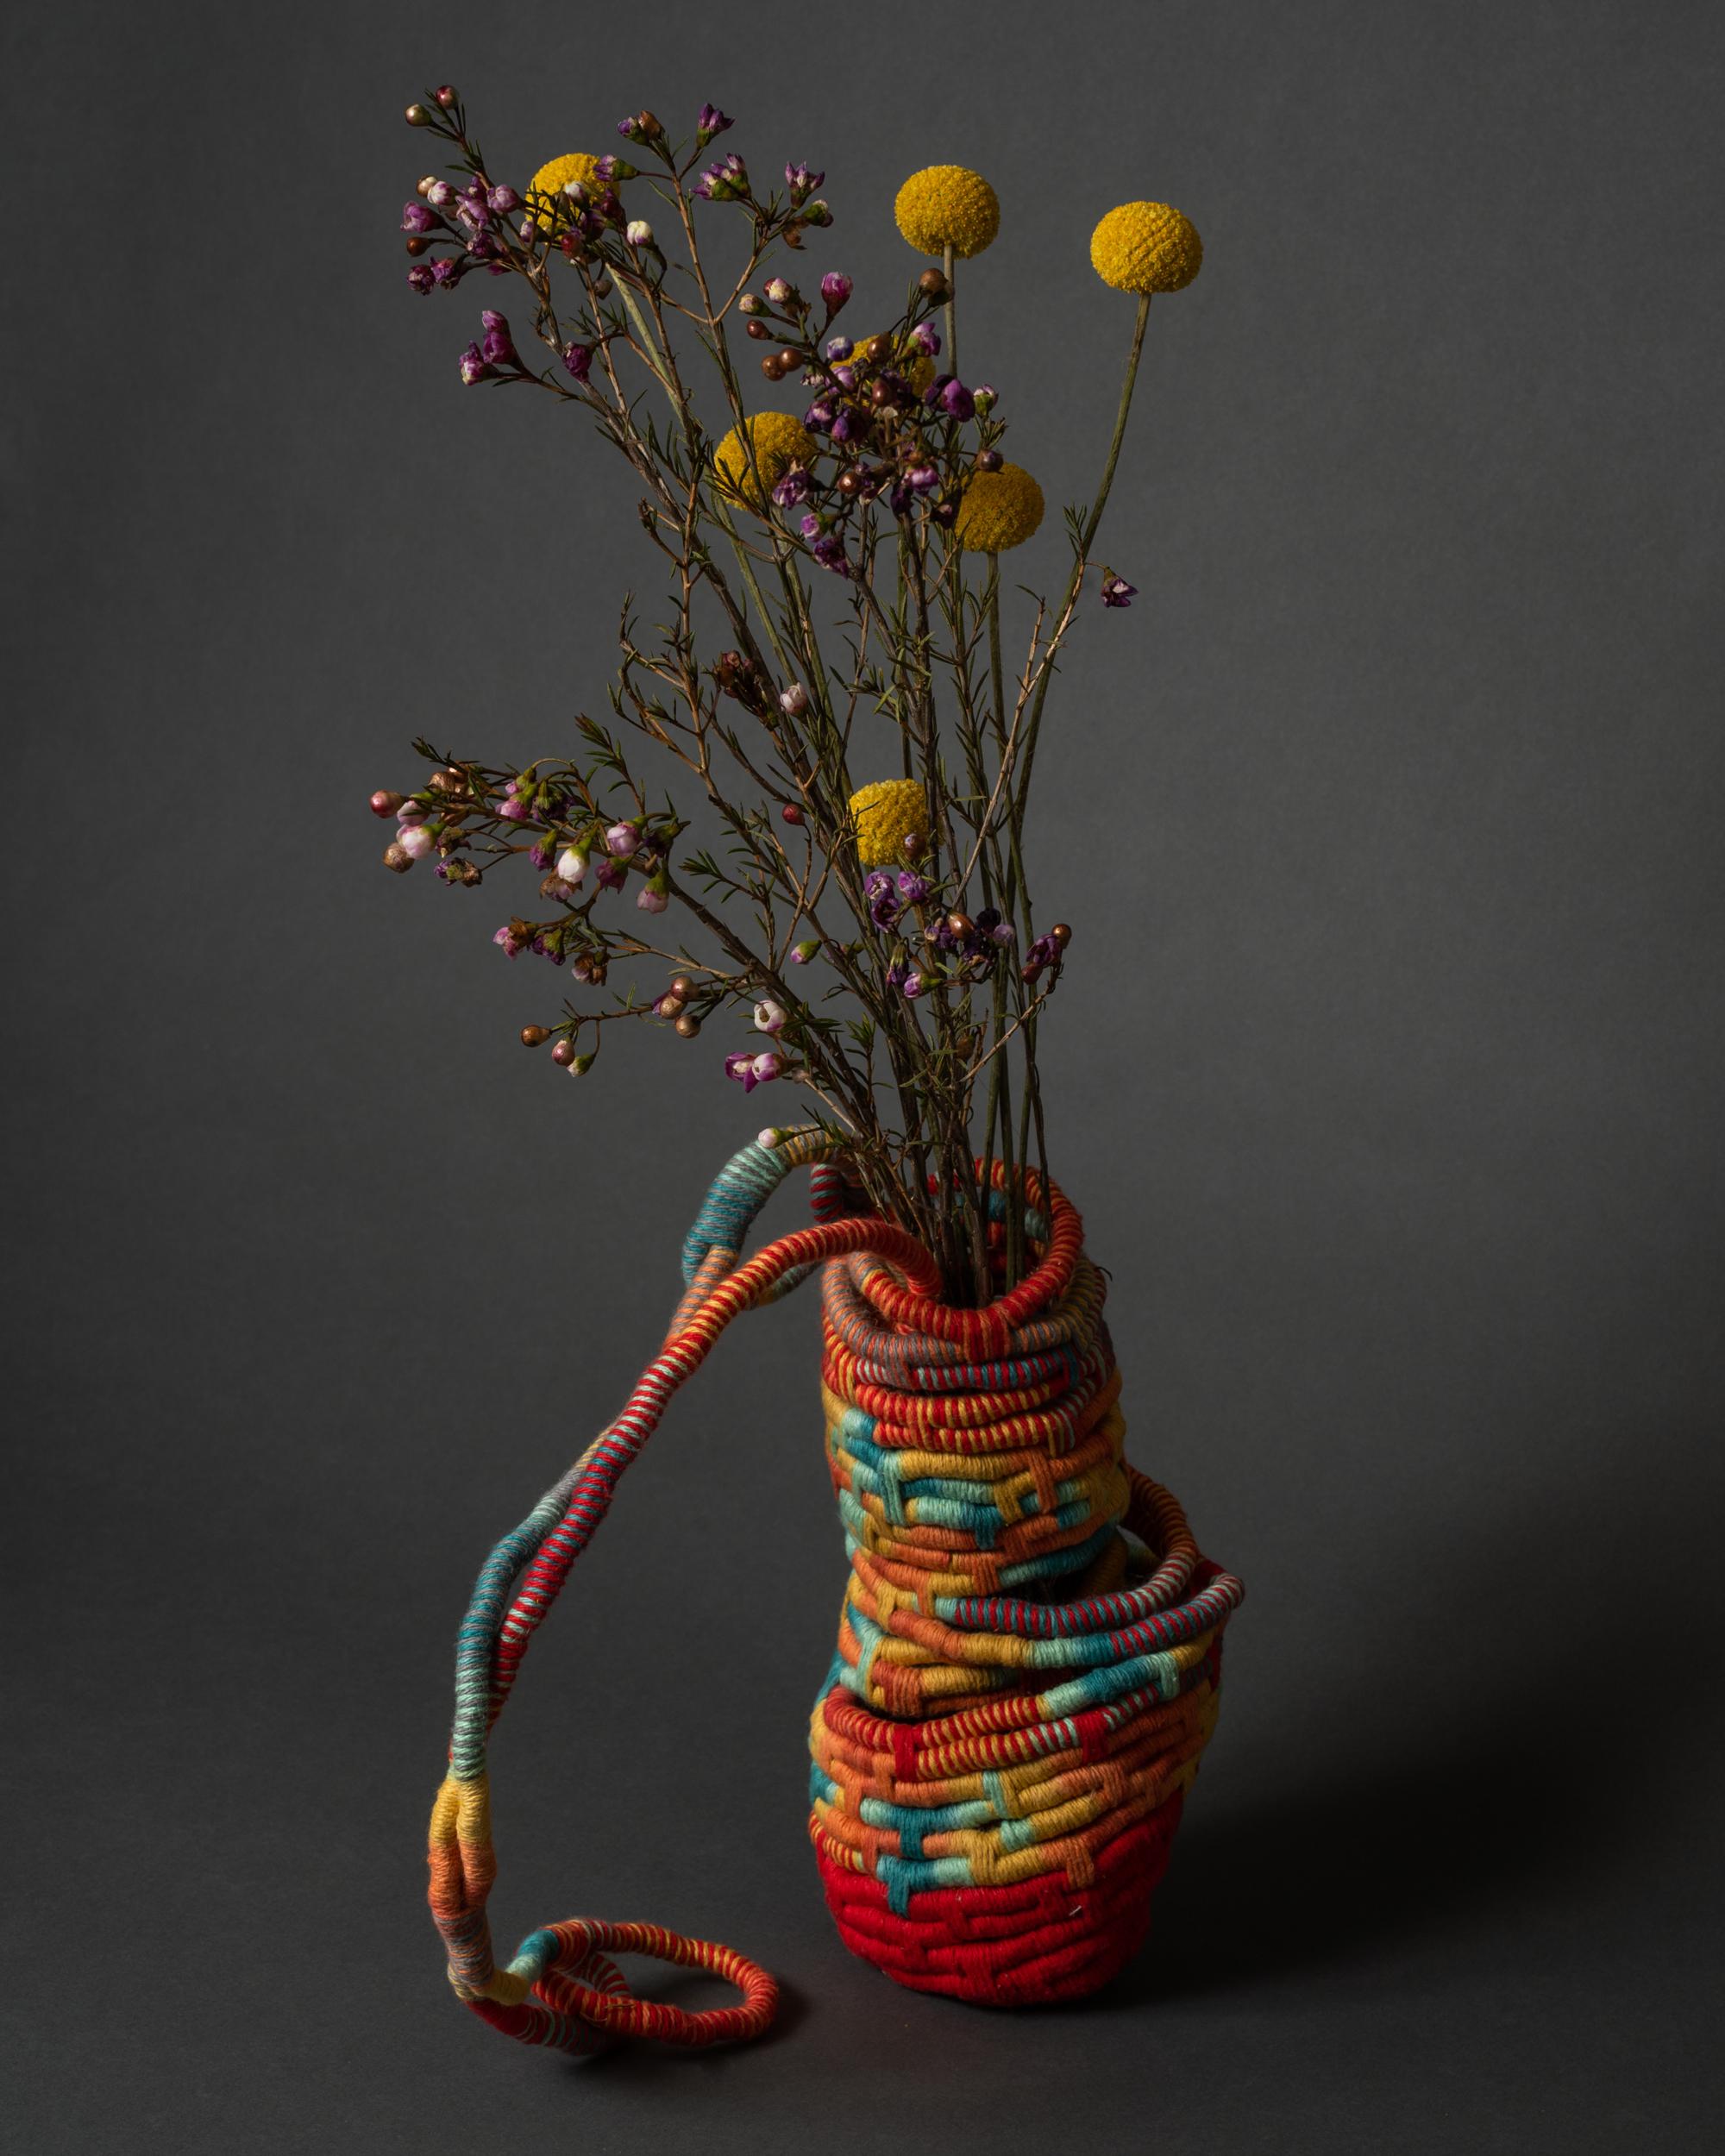 El Corazon de San Valentin, fine art coiled basket, soft sculpture, pink, yellow 3